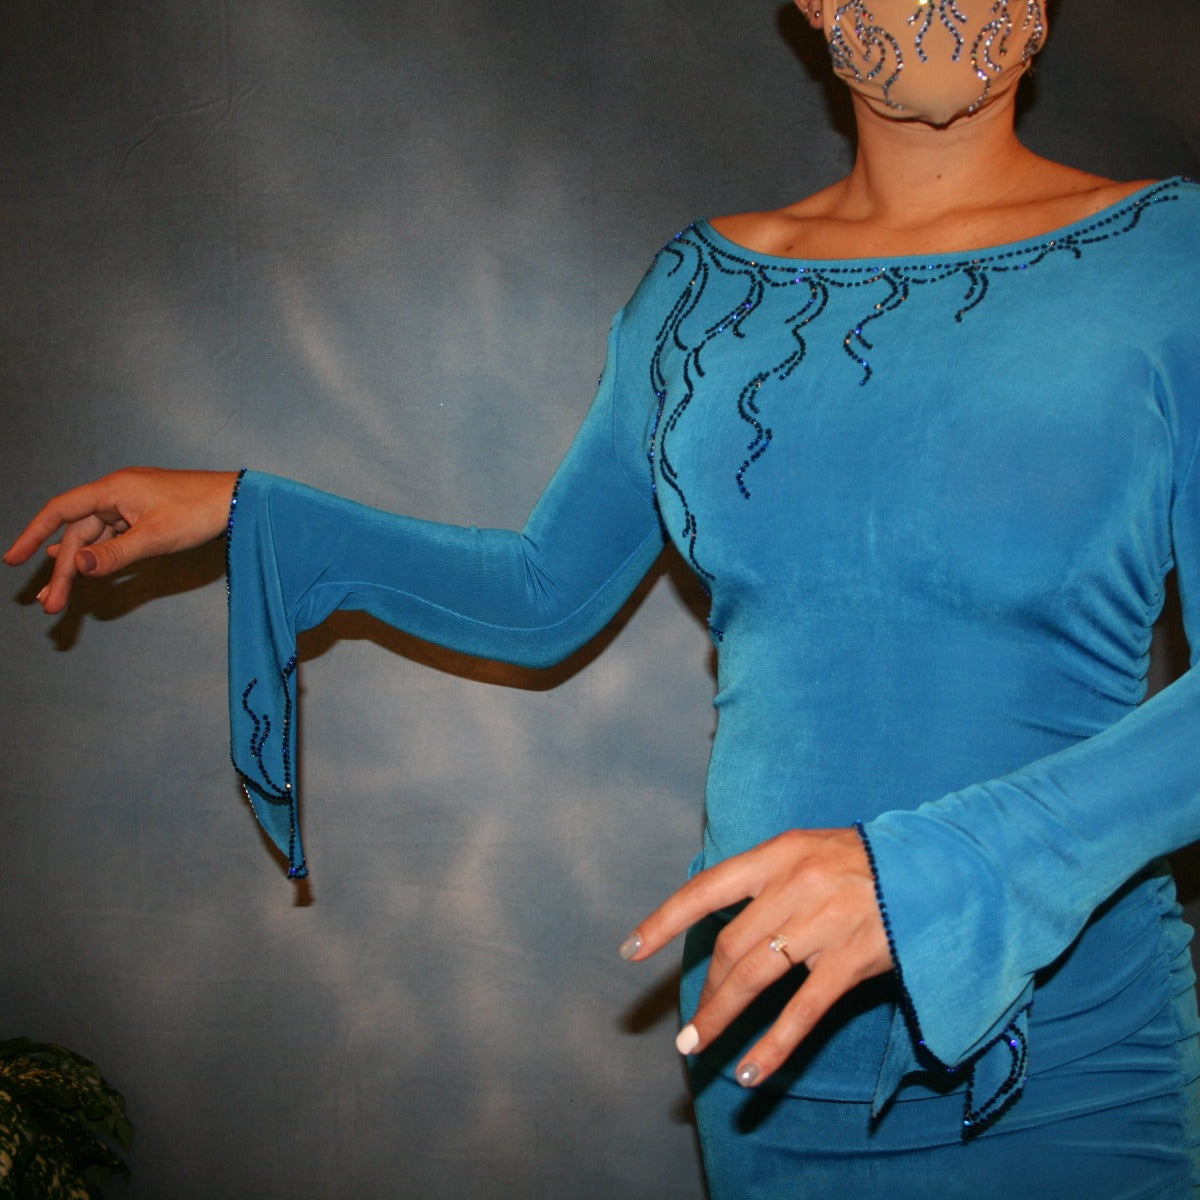 Crystal's Creations close up view of blue slinky Latin/rhythm dress with detailed blue Swarovski rhinestone work